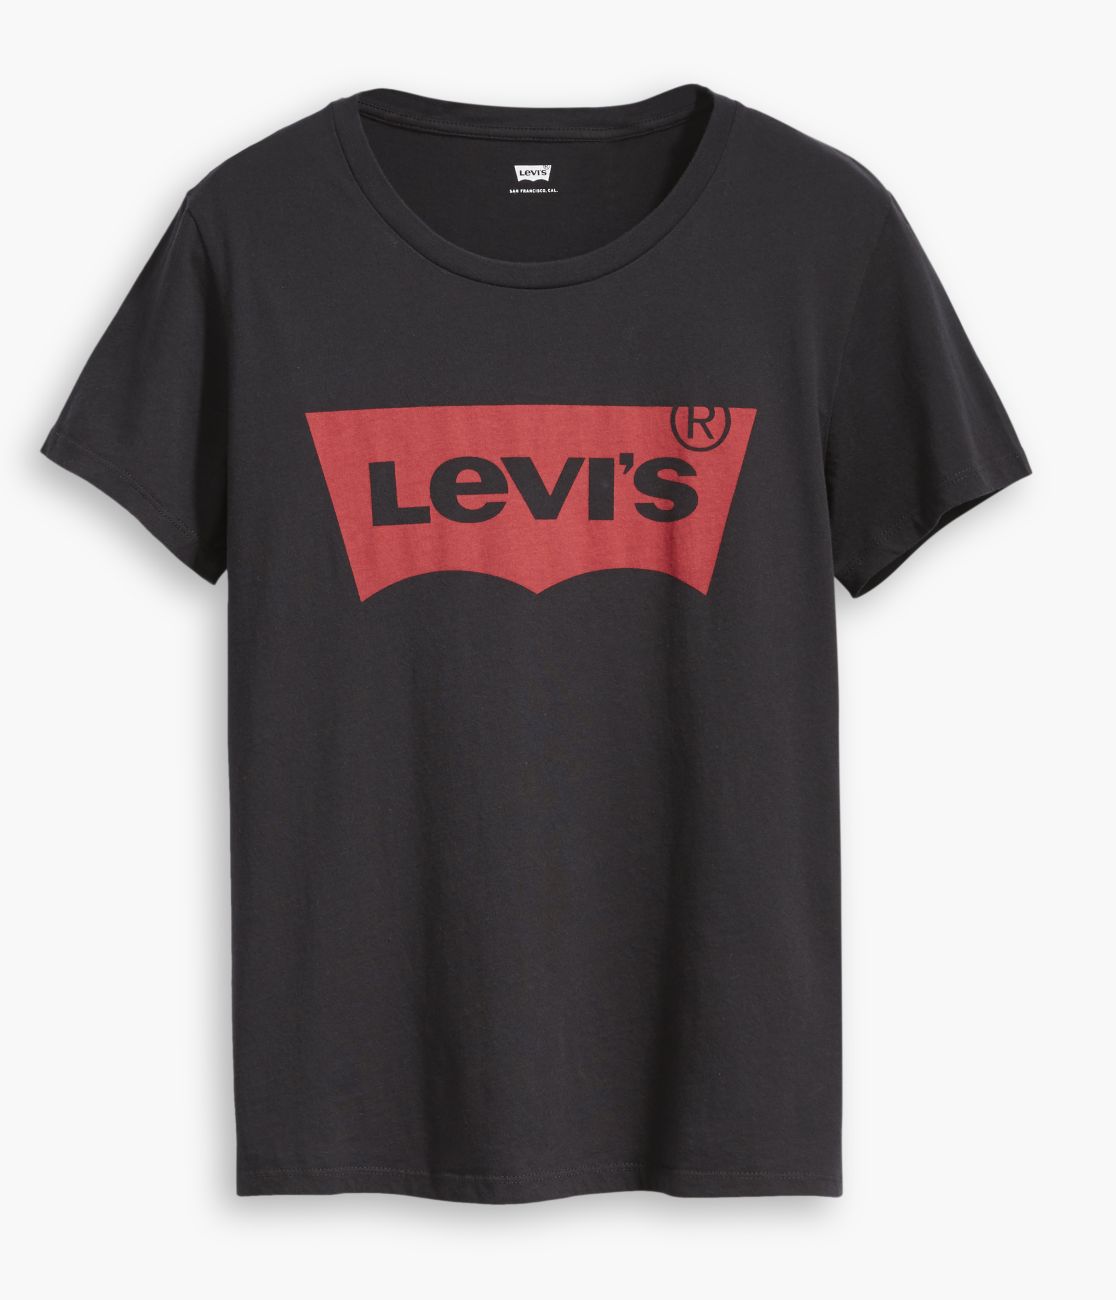 LEVIS Shirts f. Damen T-Shirt 17369-0201 schwarz W18-LDT1